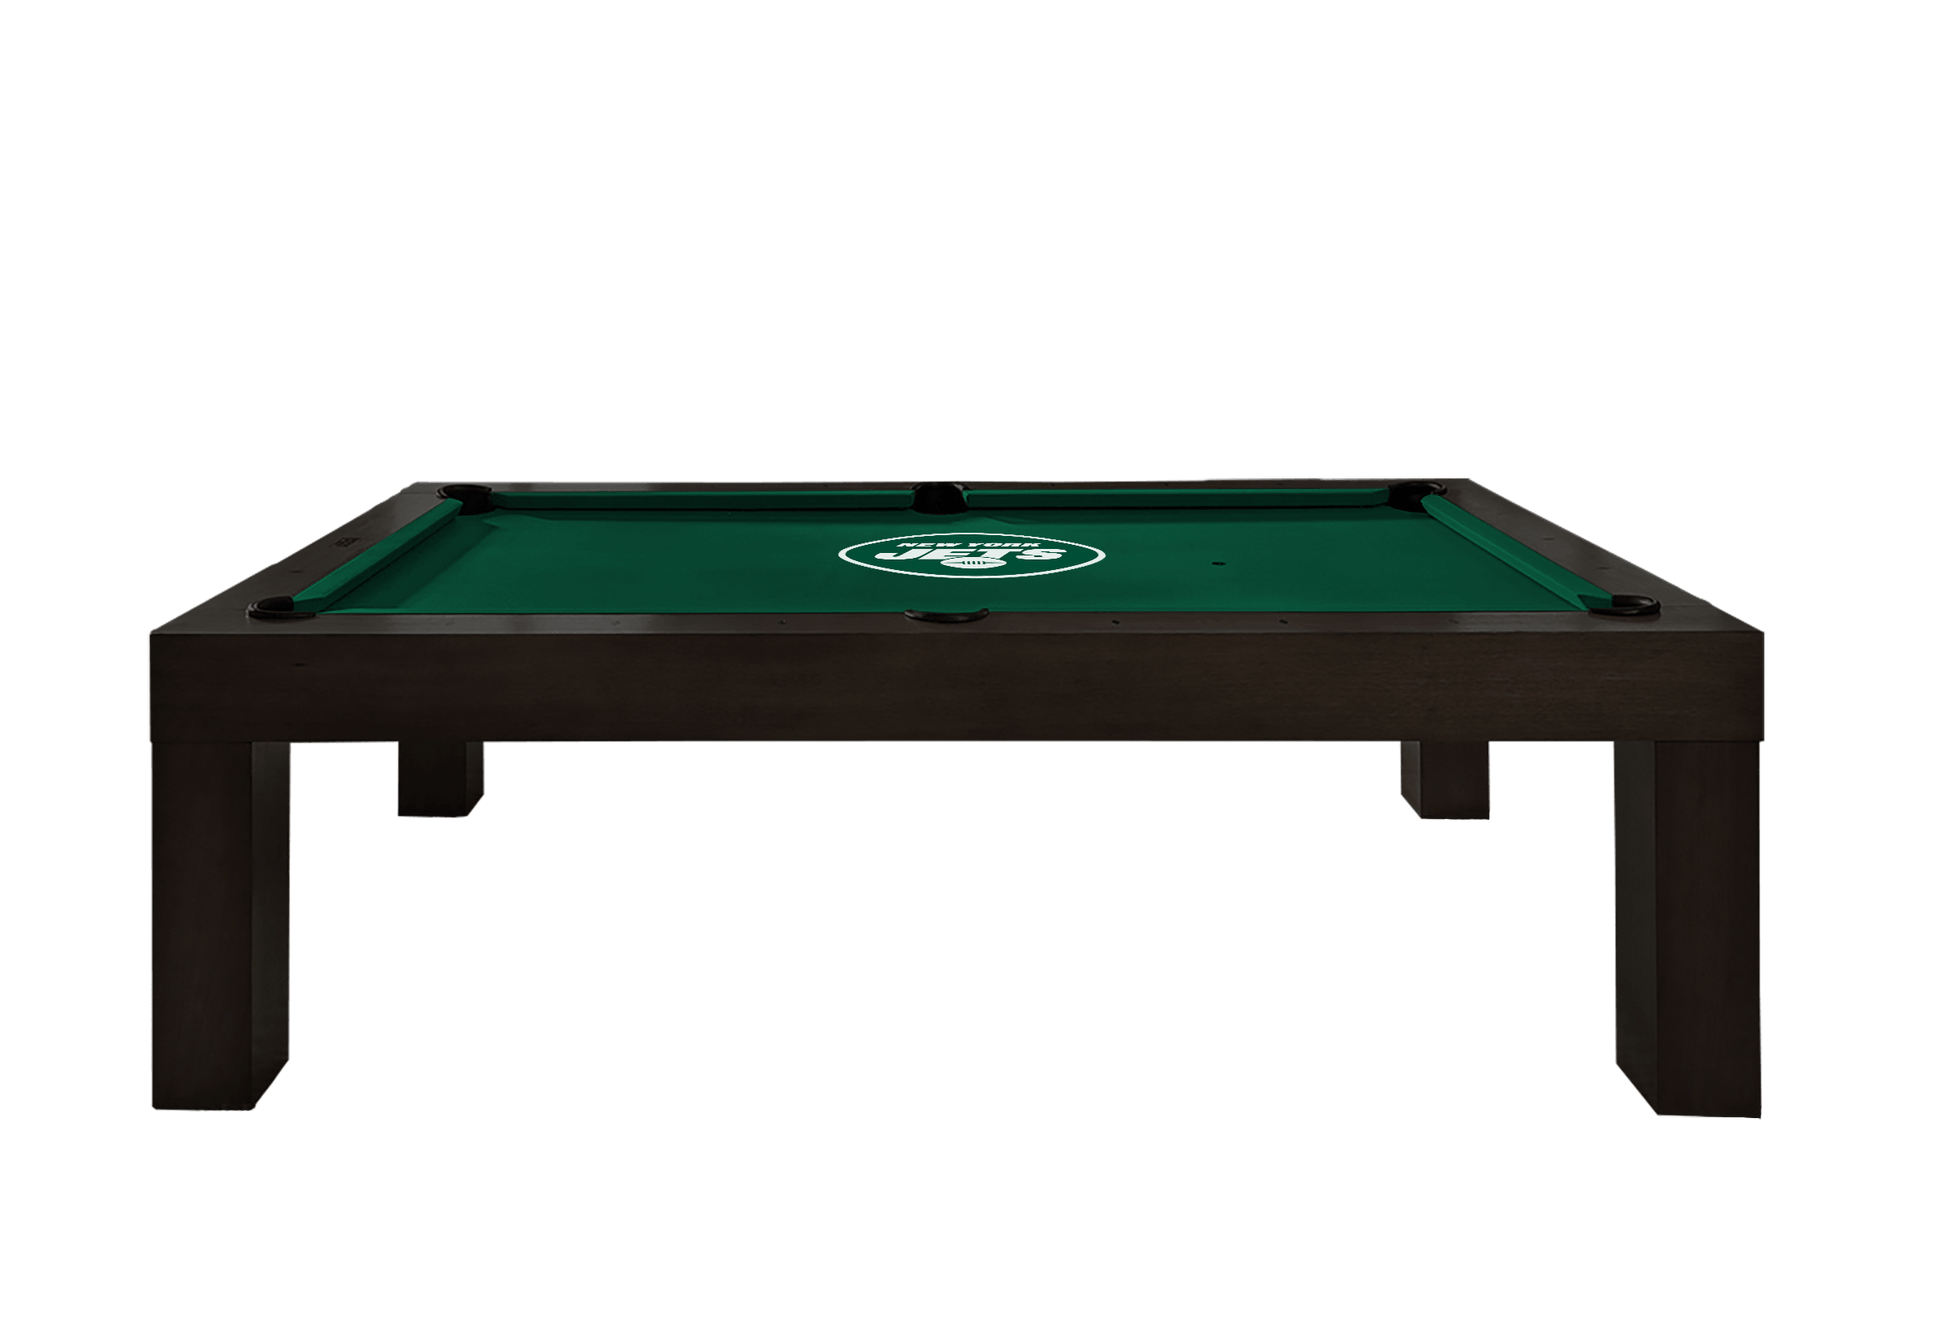 New York Jets Premium Pool Table Bundle - Black Ash Pool Bundle Home Arcade Games   